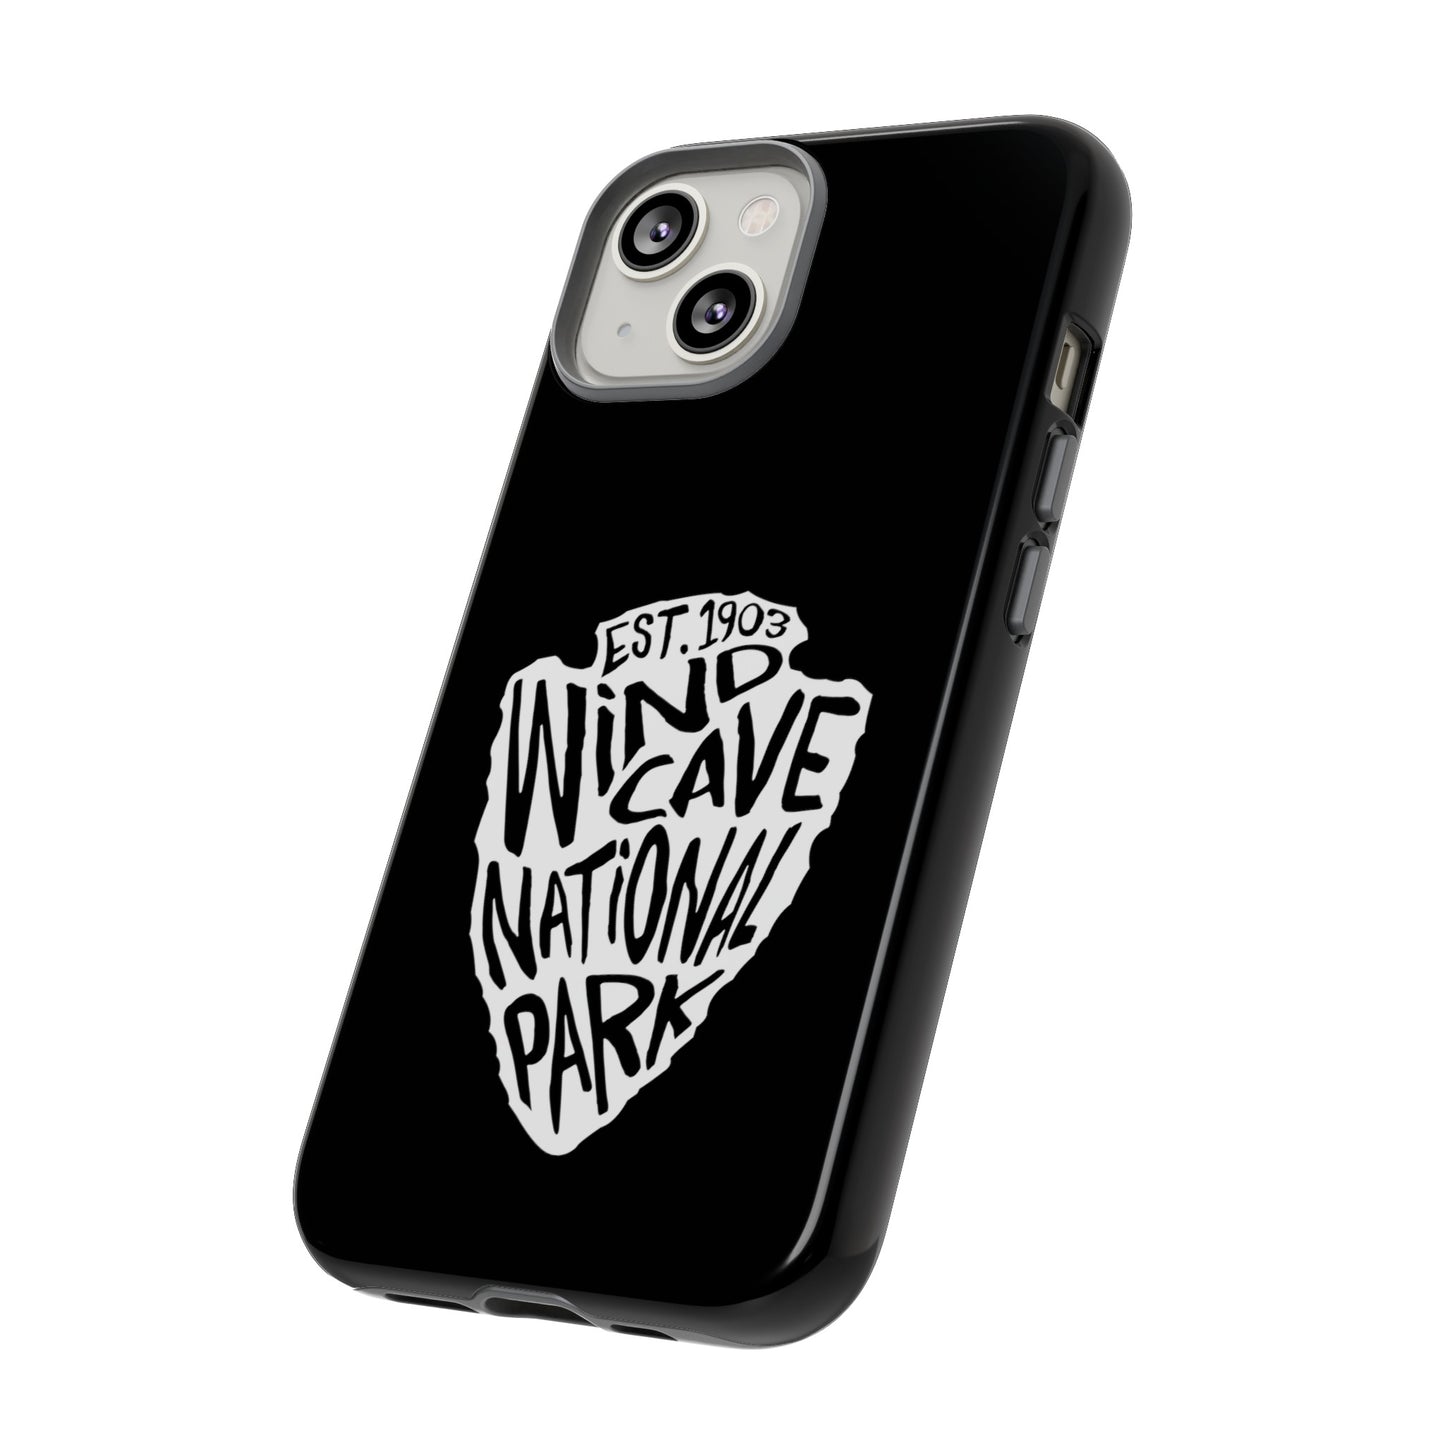 Wind Cave National Park Phone Case - Arrowhead Design